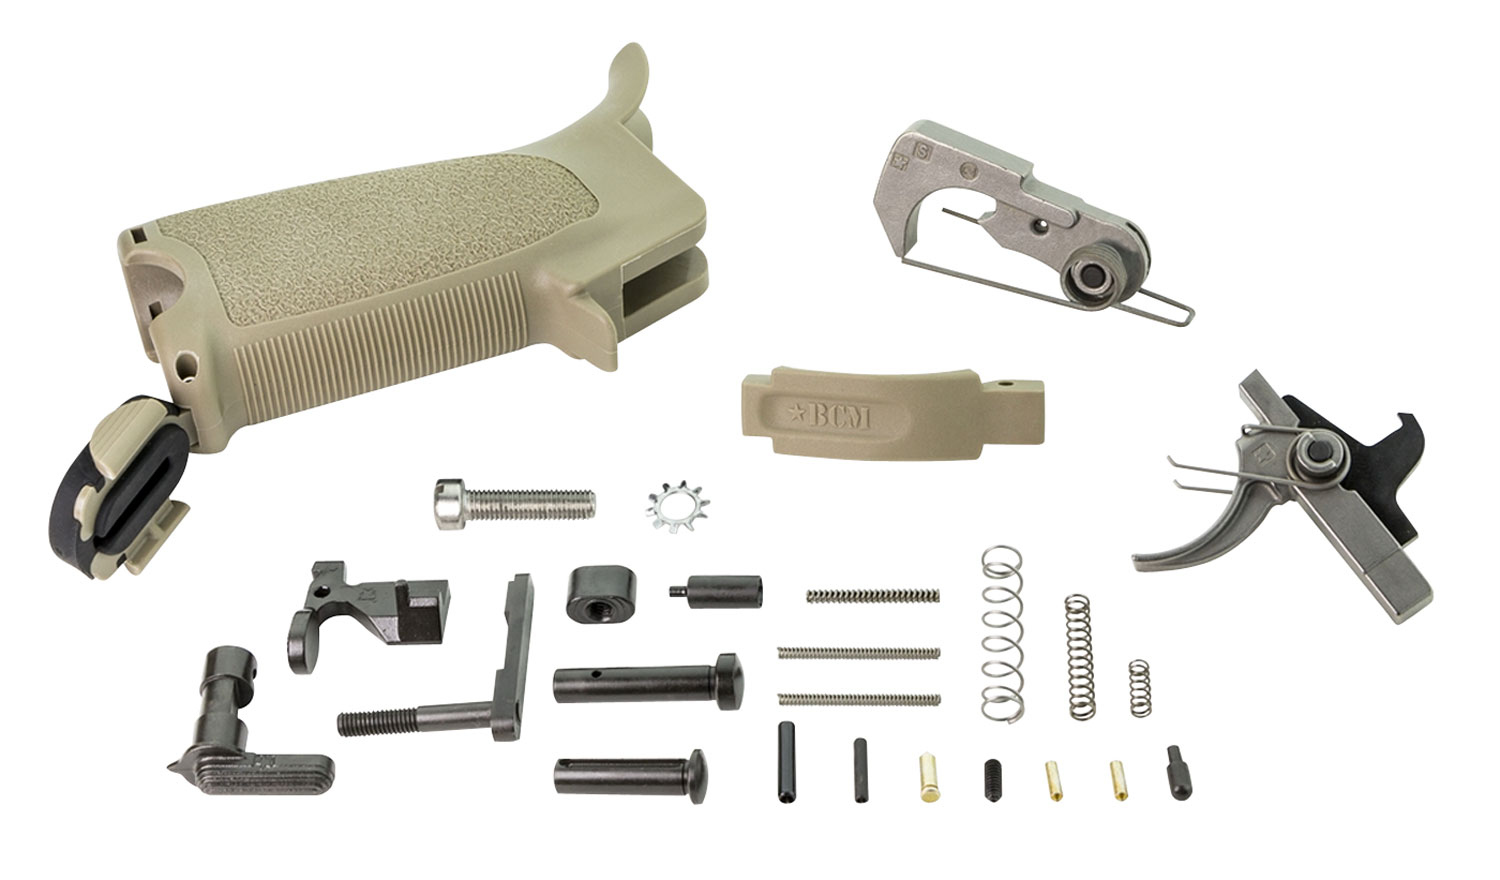 BCM - AR-15 Enhanced Lower Parts Kit - FDE